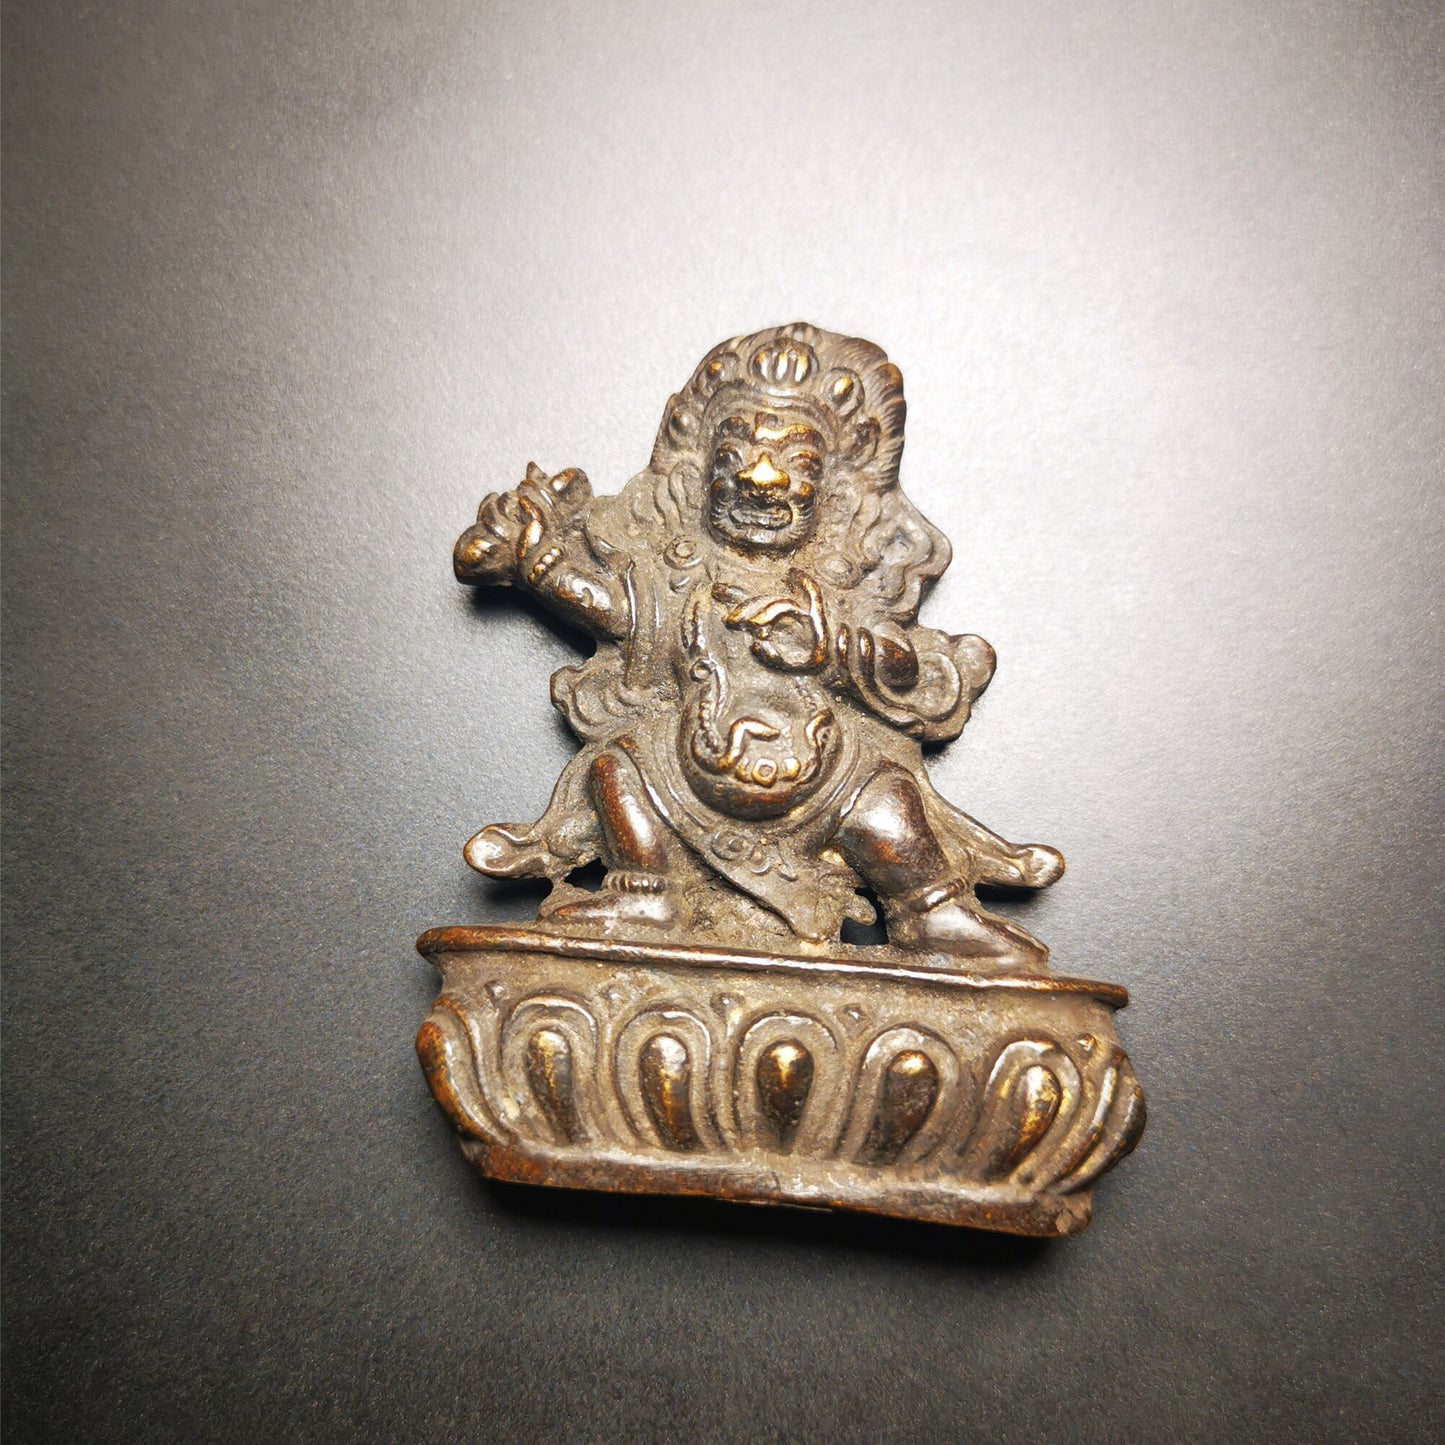 Gandhanra Acient Vajrapani Amulet,Tibetan Buddhism Statue,the Protector and Guide of Gautama Buddha,100 years old